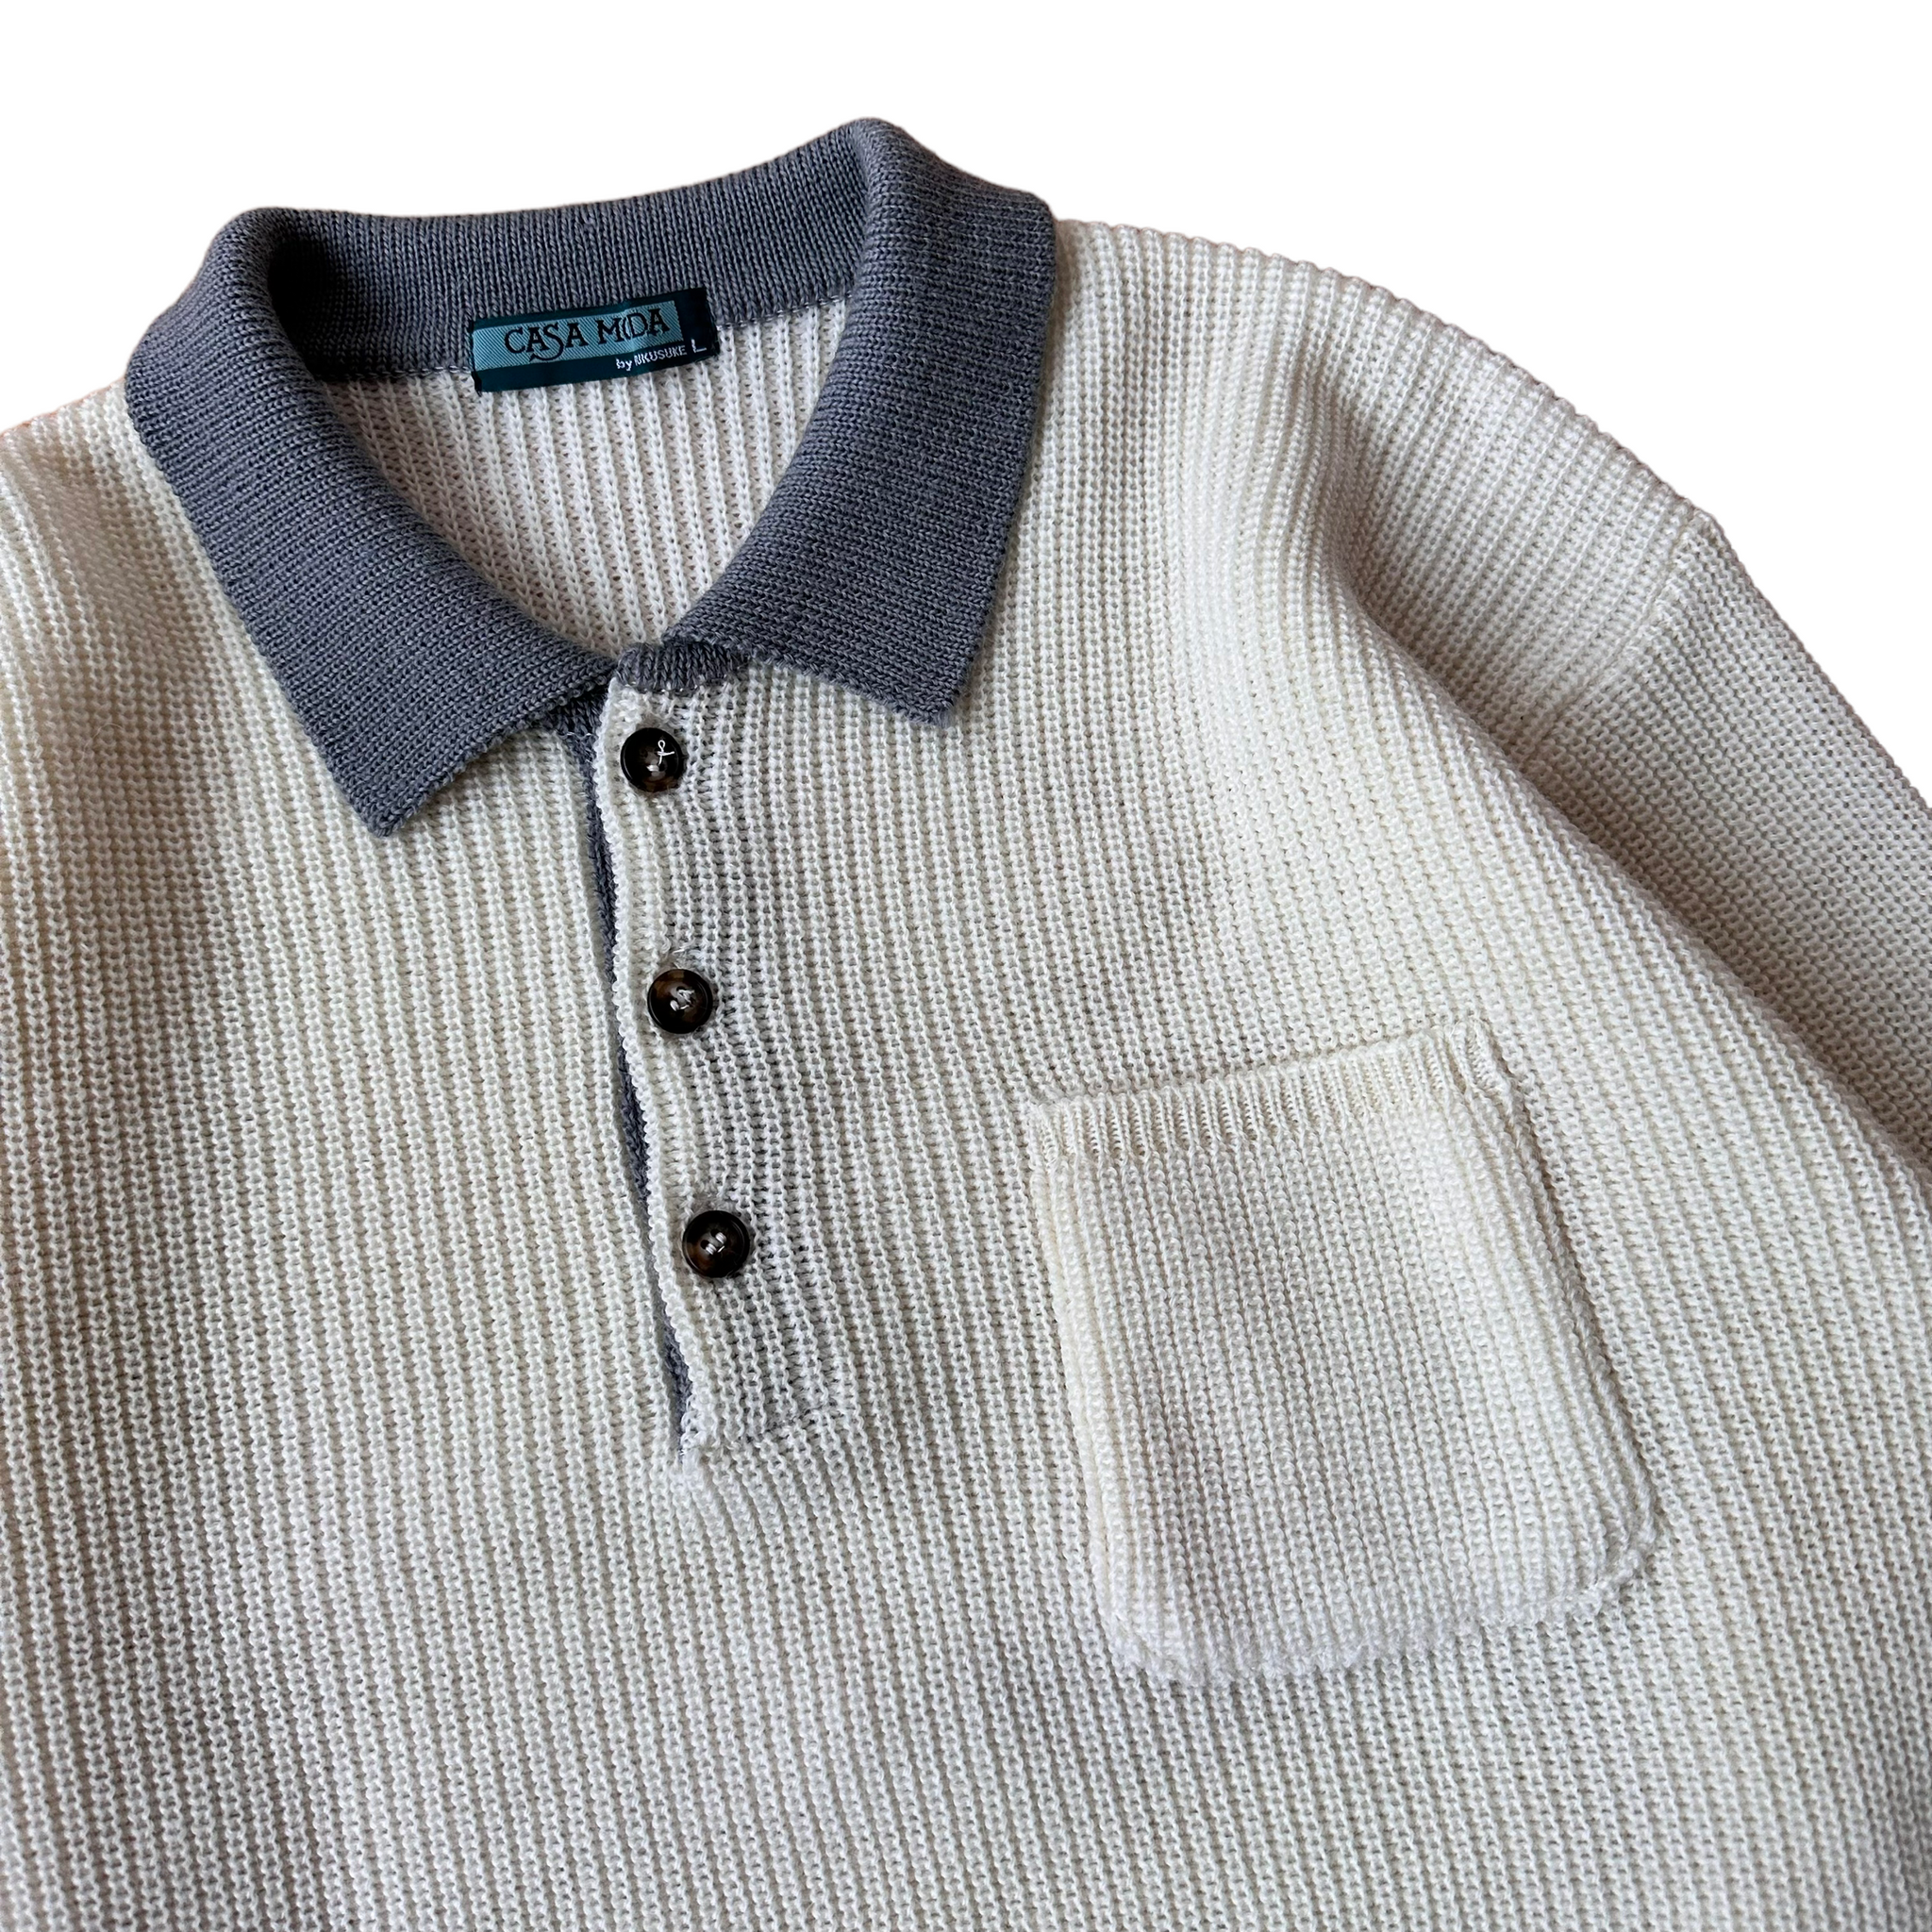 Wool pocket sweater   S/M fit